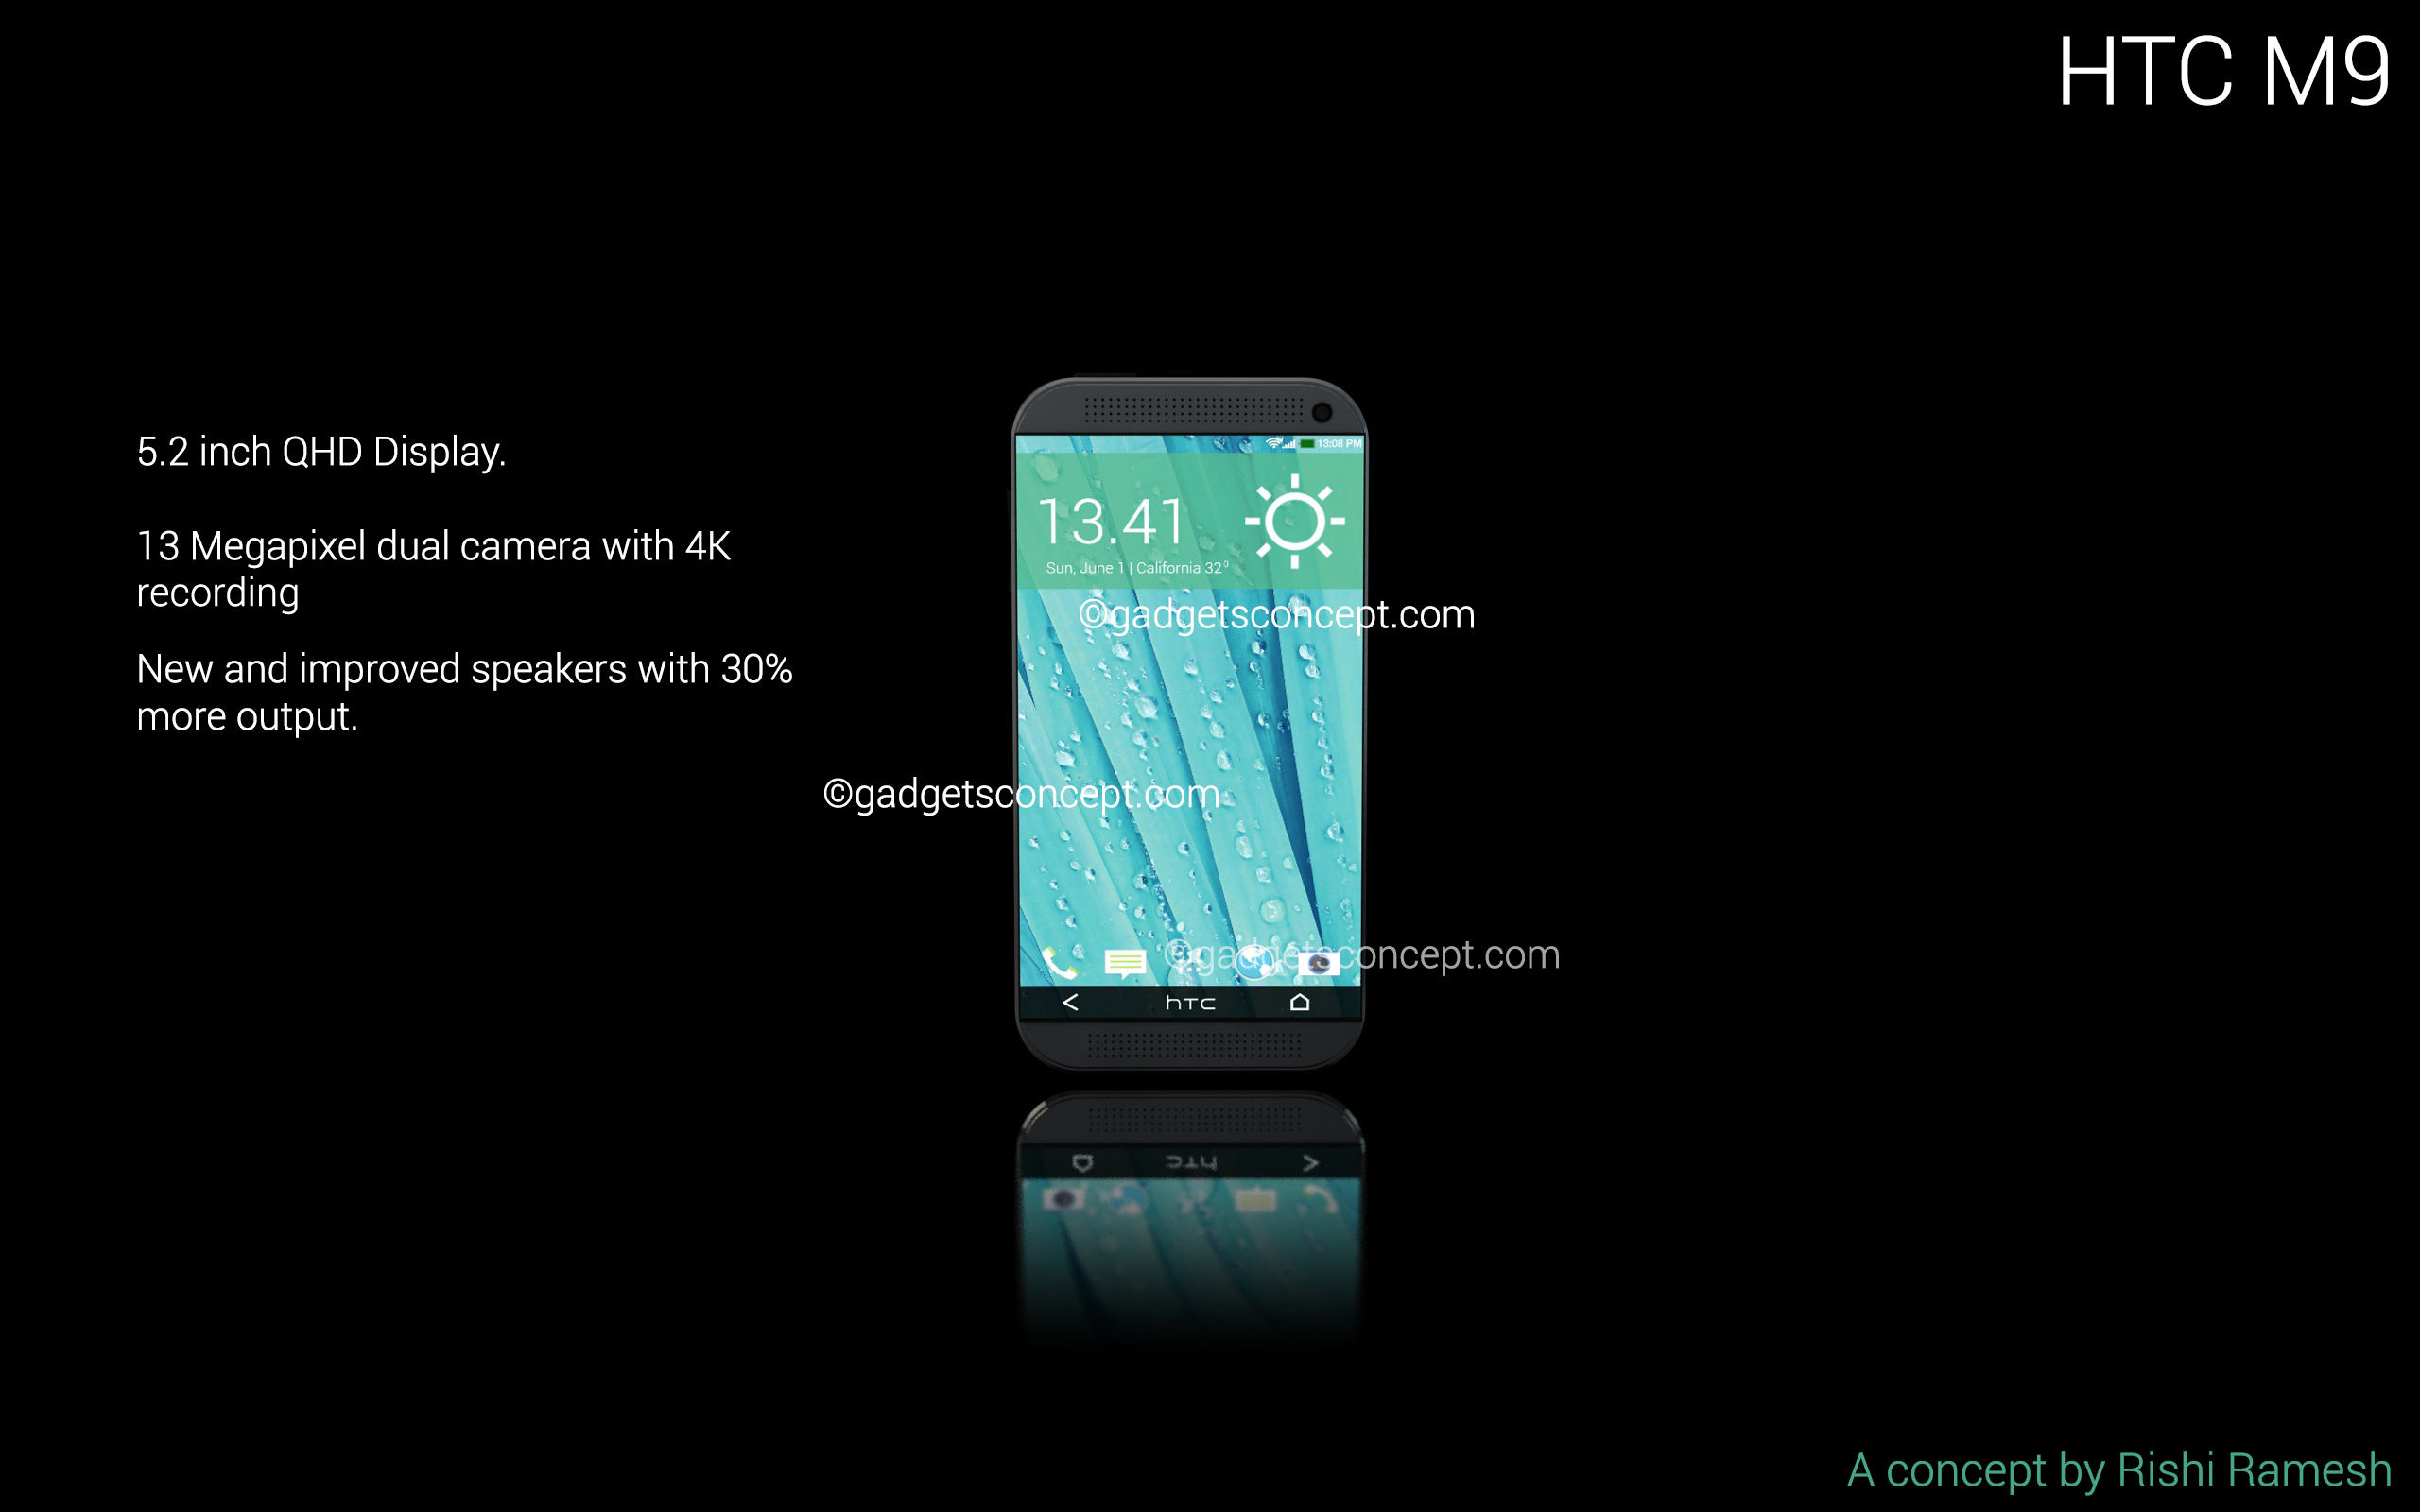 M8 ยังไม่ทันเก่า ภาพ Concept ของ HTC One M9 มาซะแล้ว ดูซิจะเปลี่ยนไปแค่ไหน